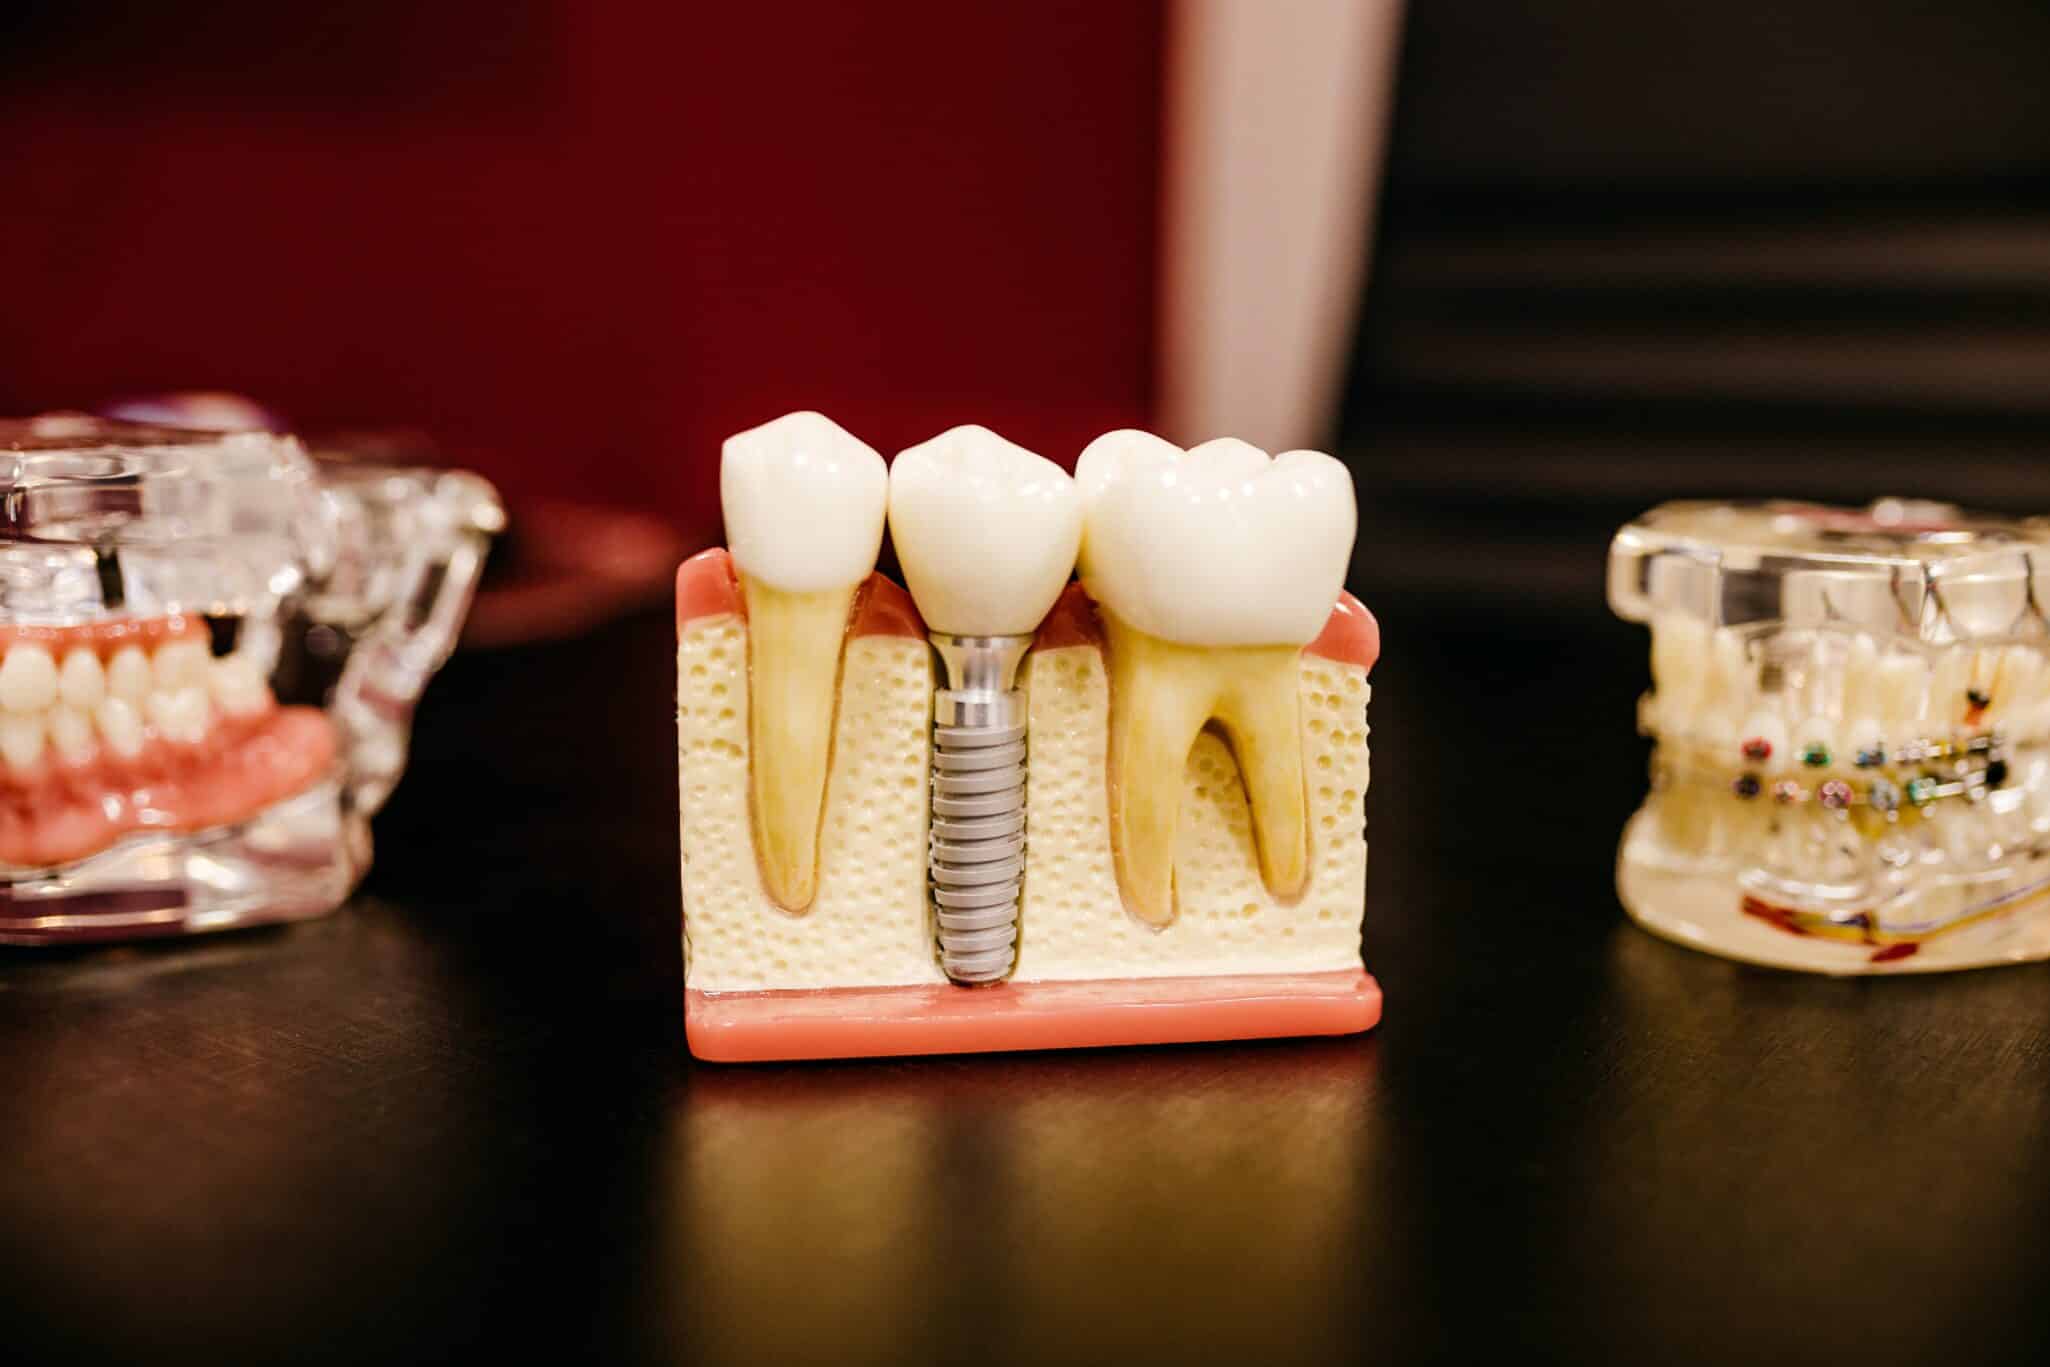 A dental model showing the benefits of dental implants.